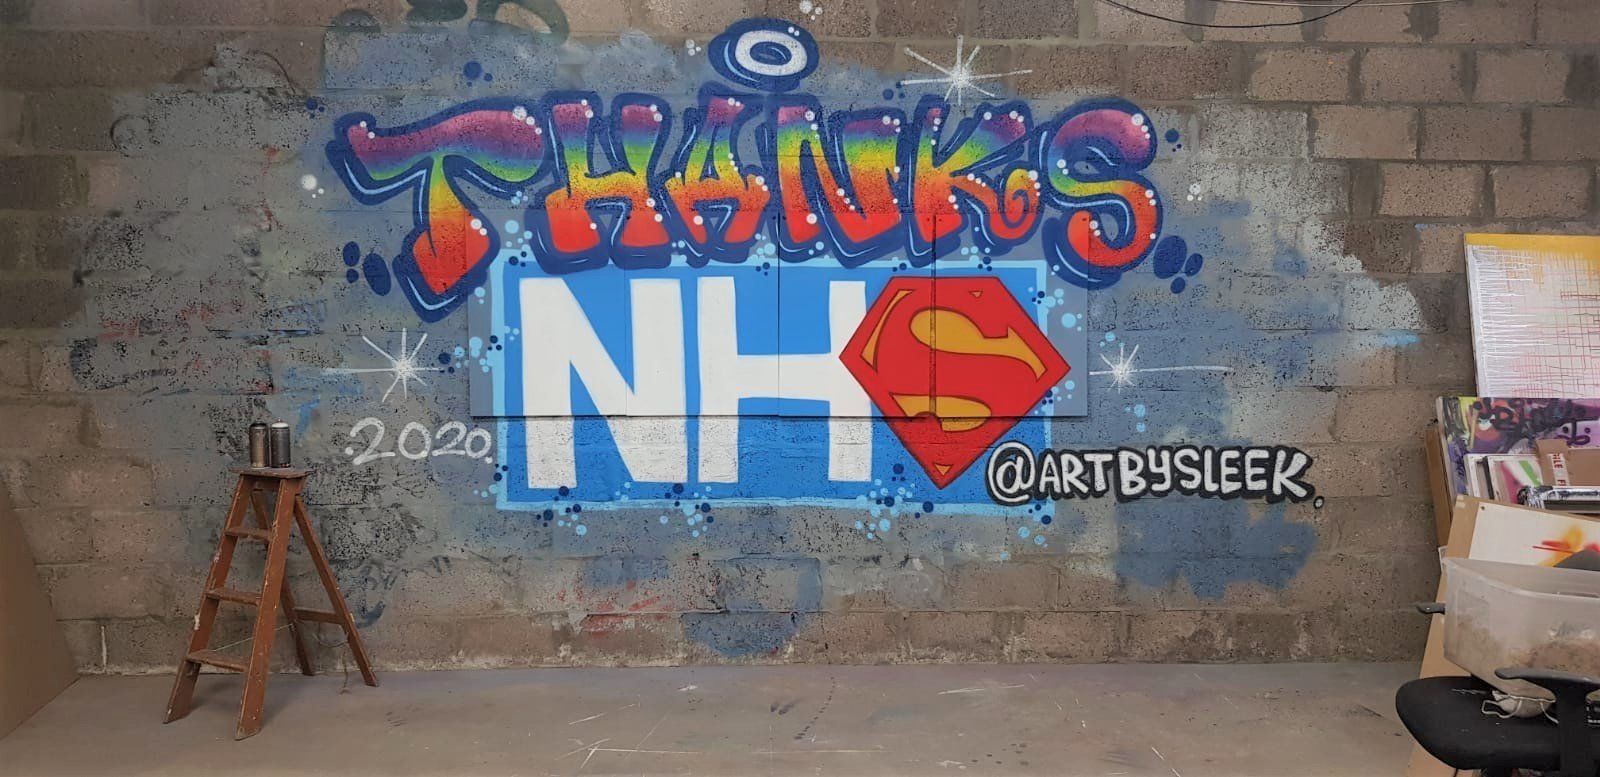 Thanks NHS grafitti art by edinburgh artist sleek